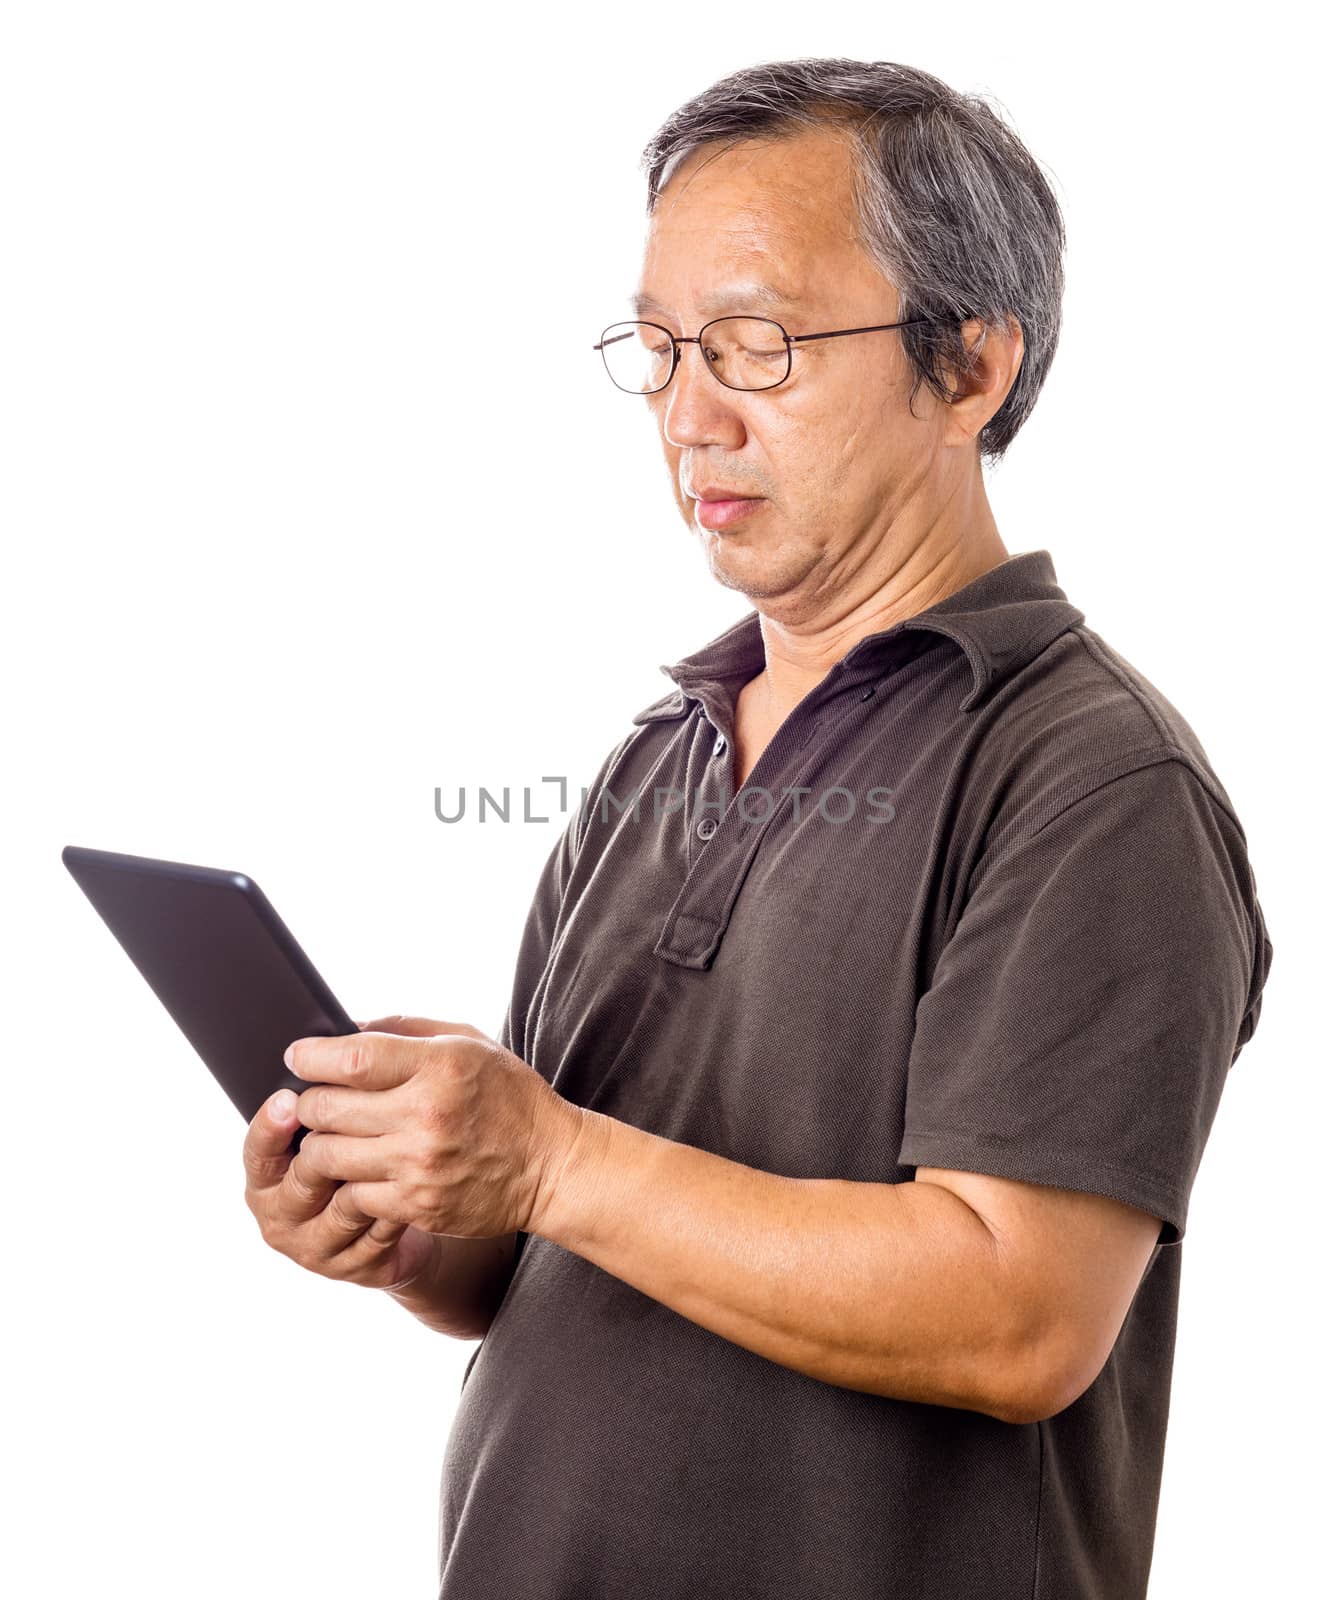 Asian man using tablet